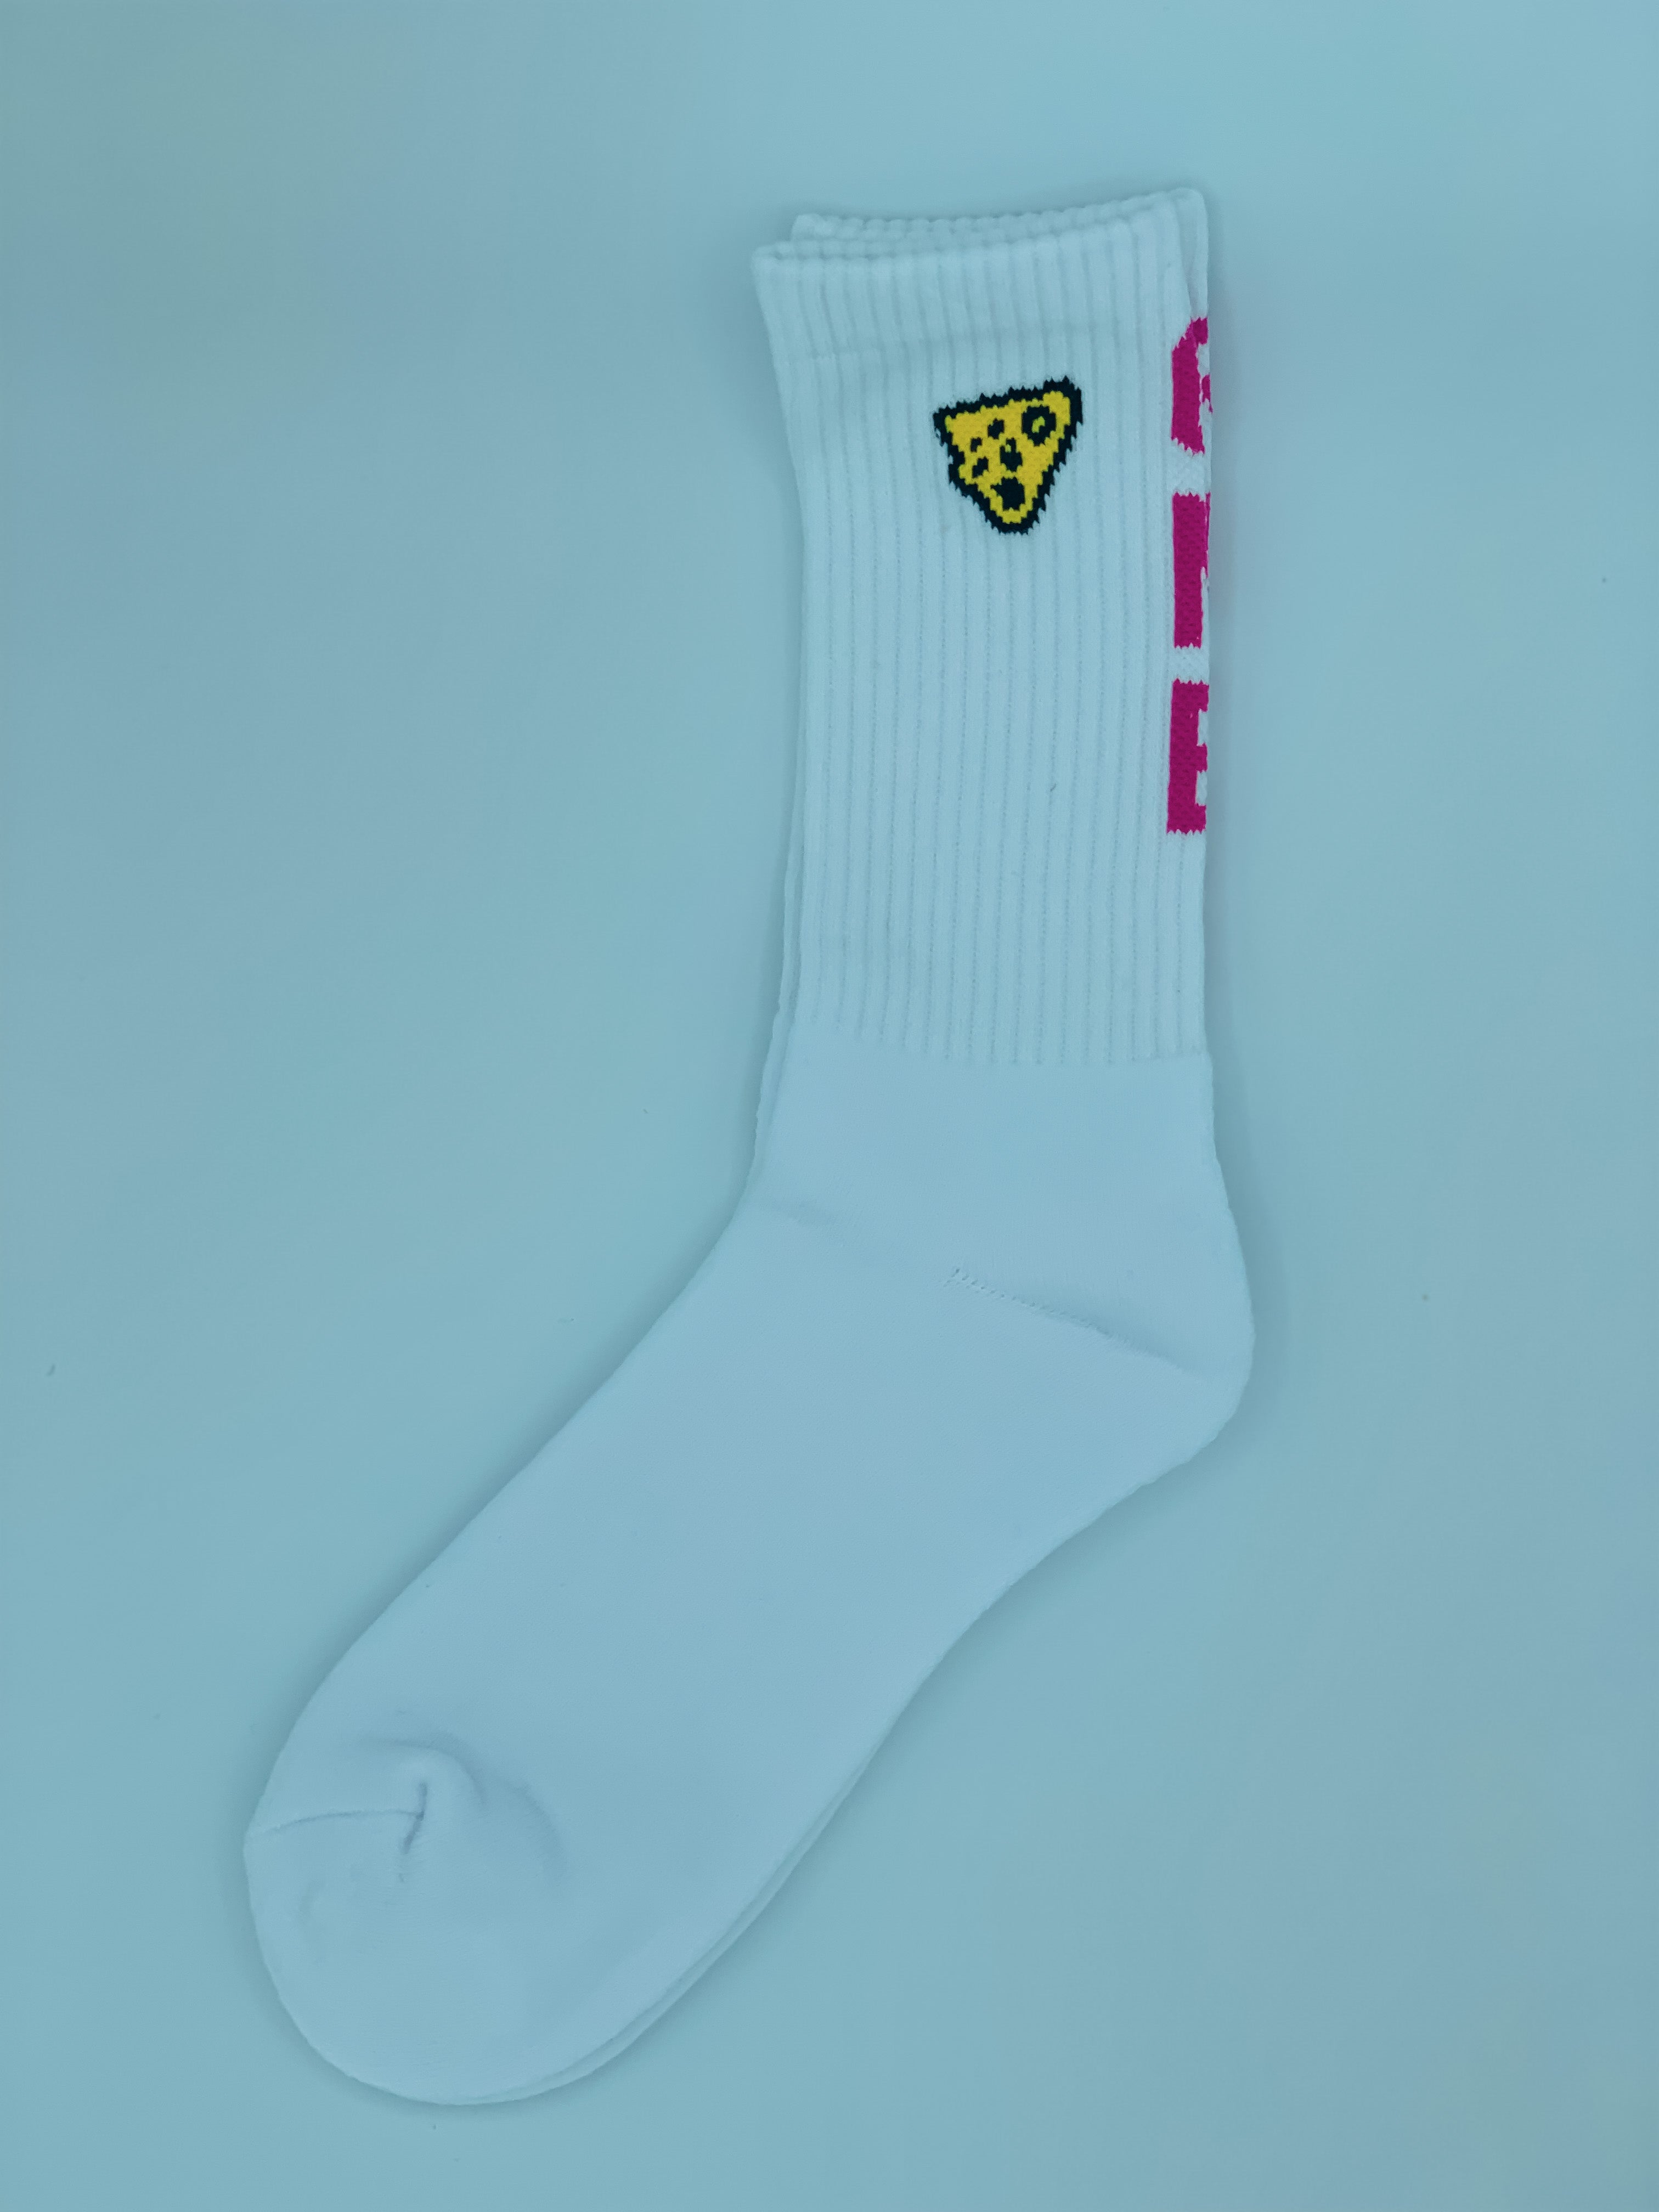 Pabanda One Race Socks